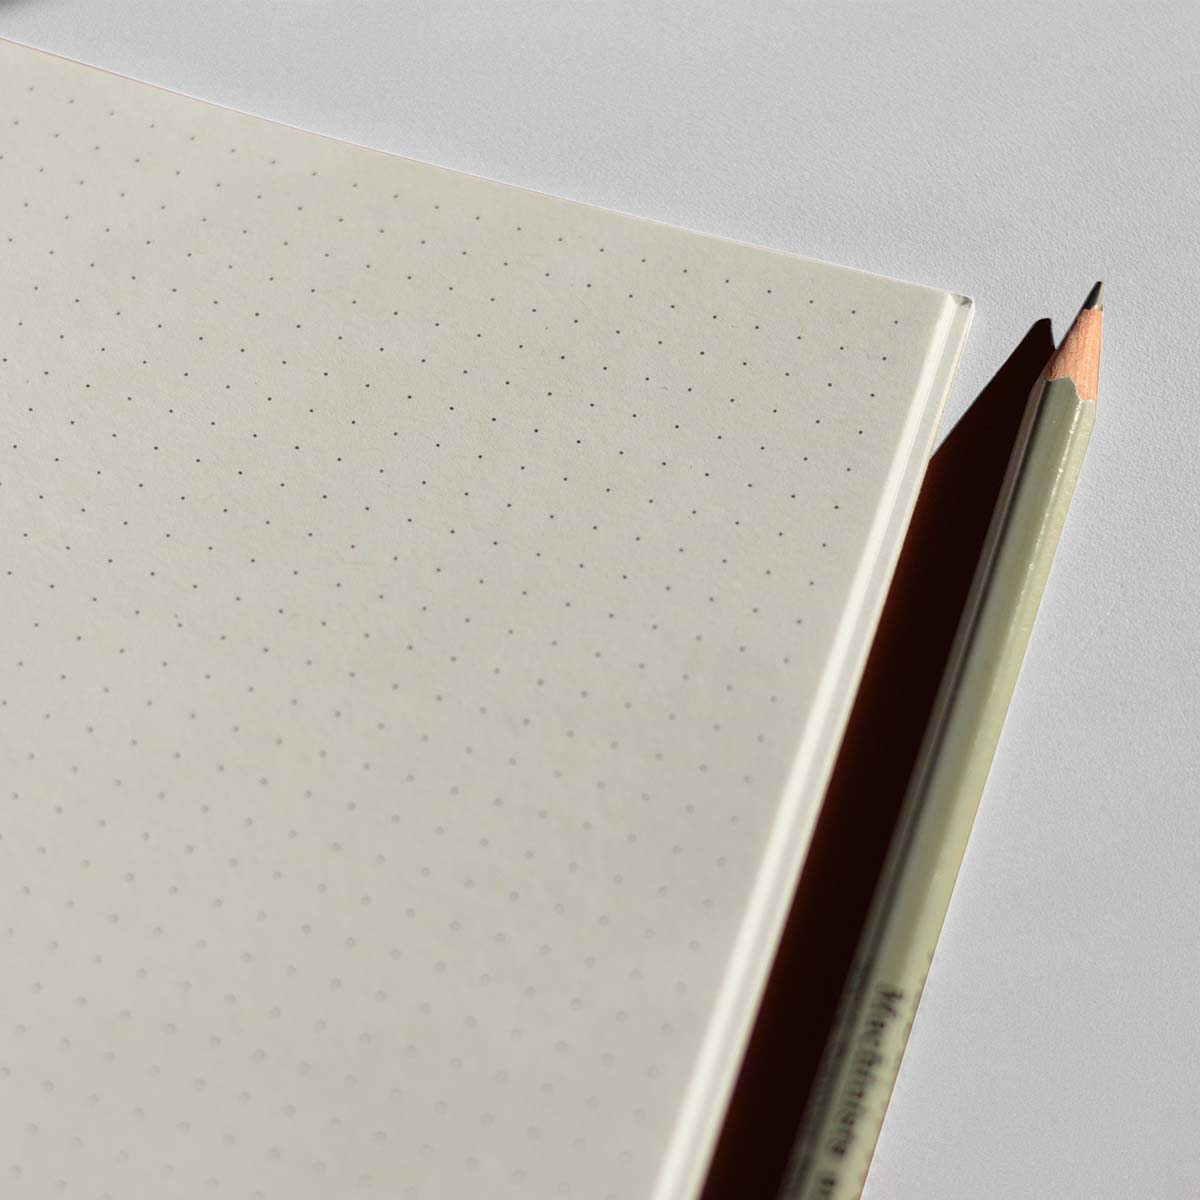 VERNON Studio A4 Notebook - Dot and Blank